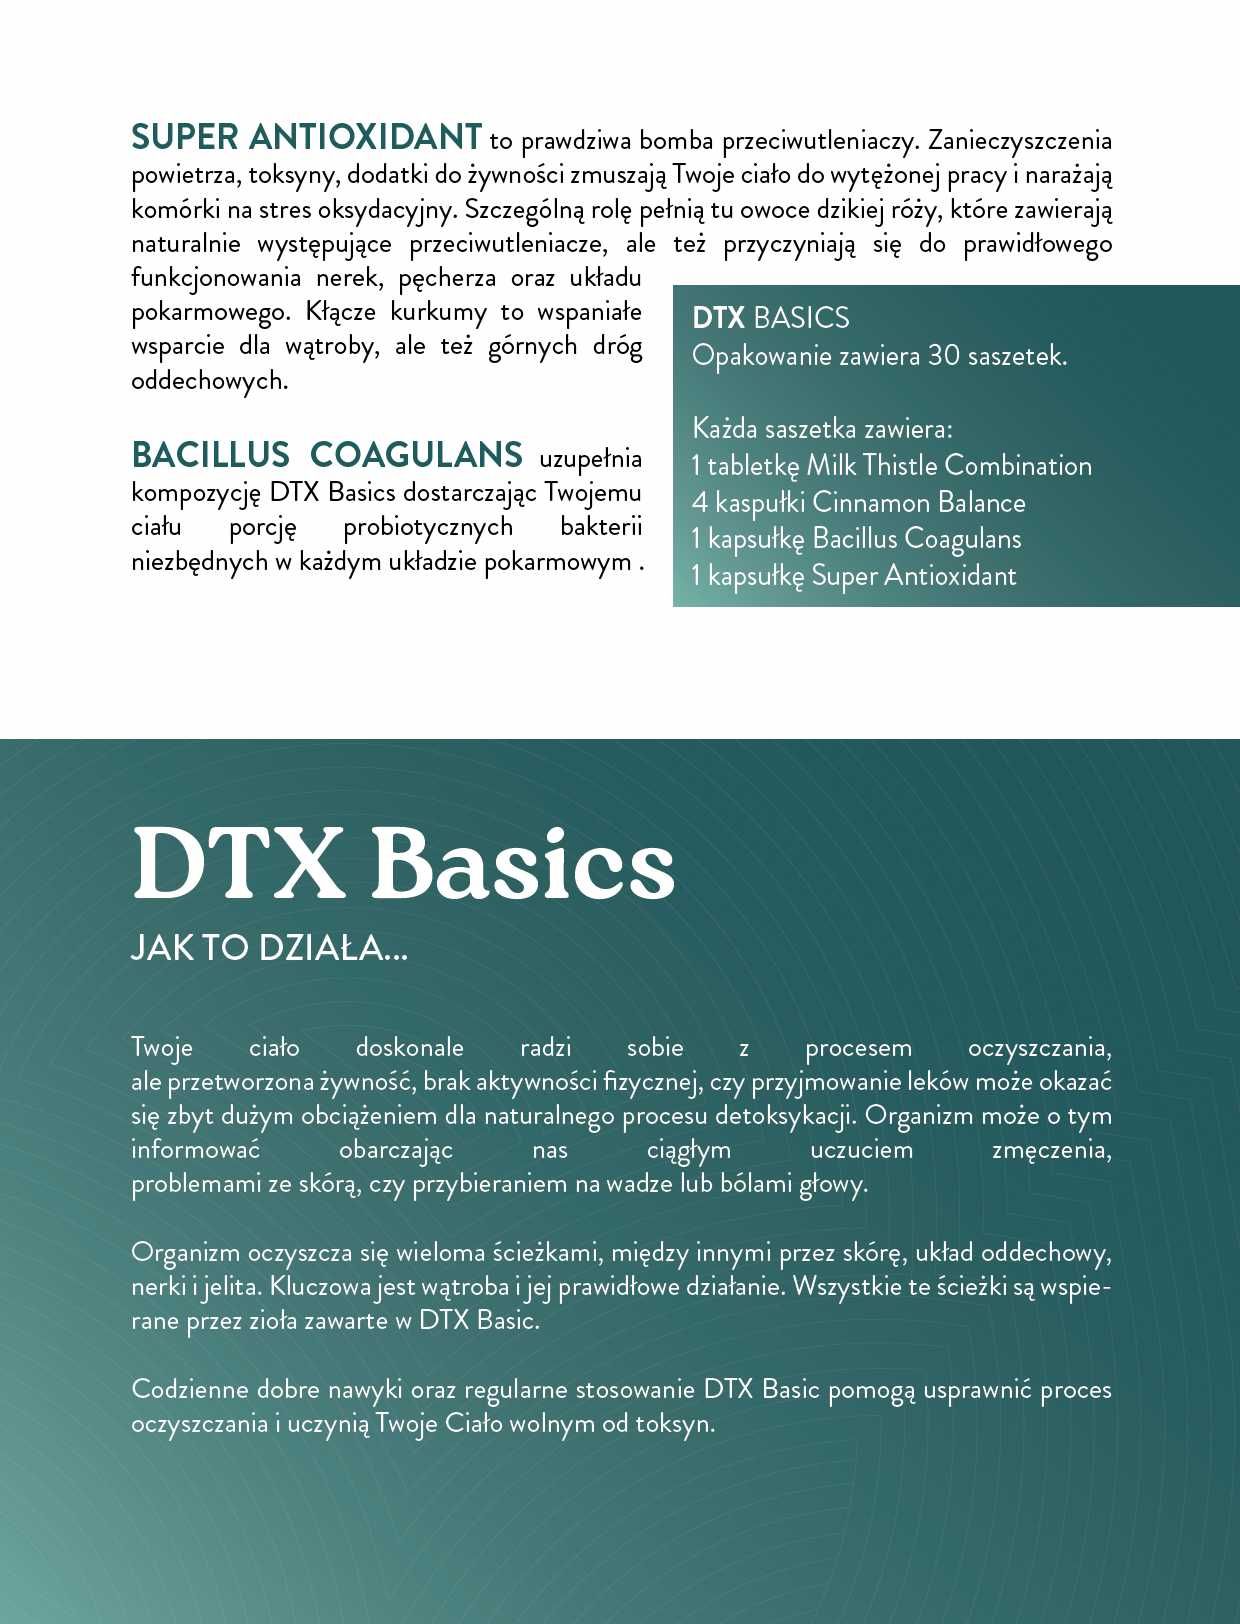 DTX Basics (detox) od Nature's Sunshine !!